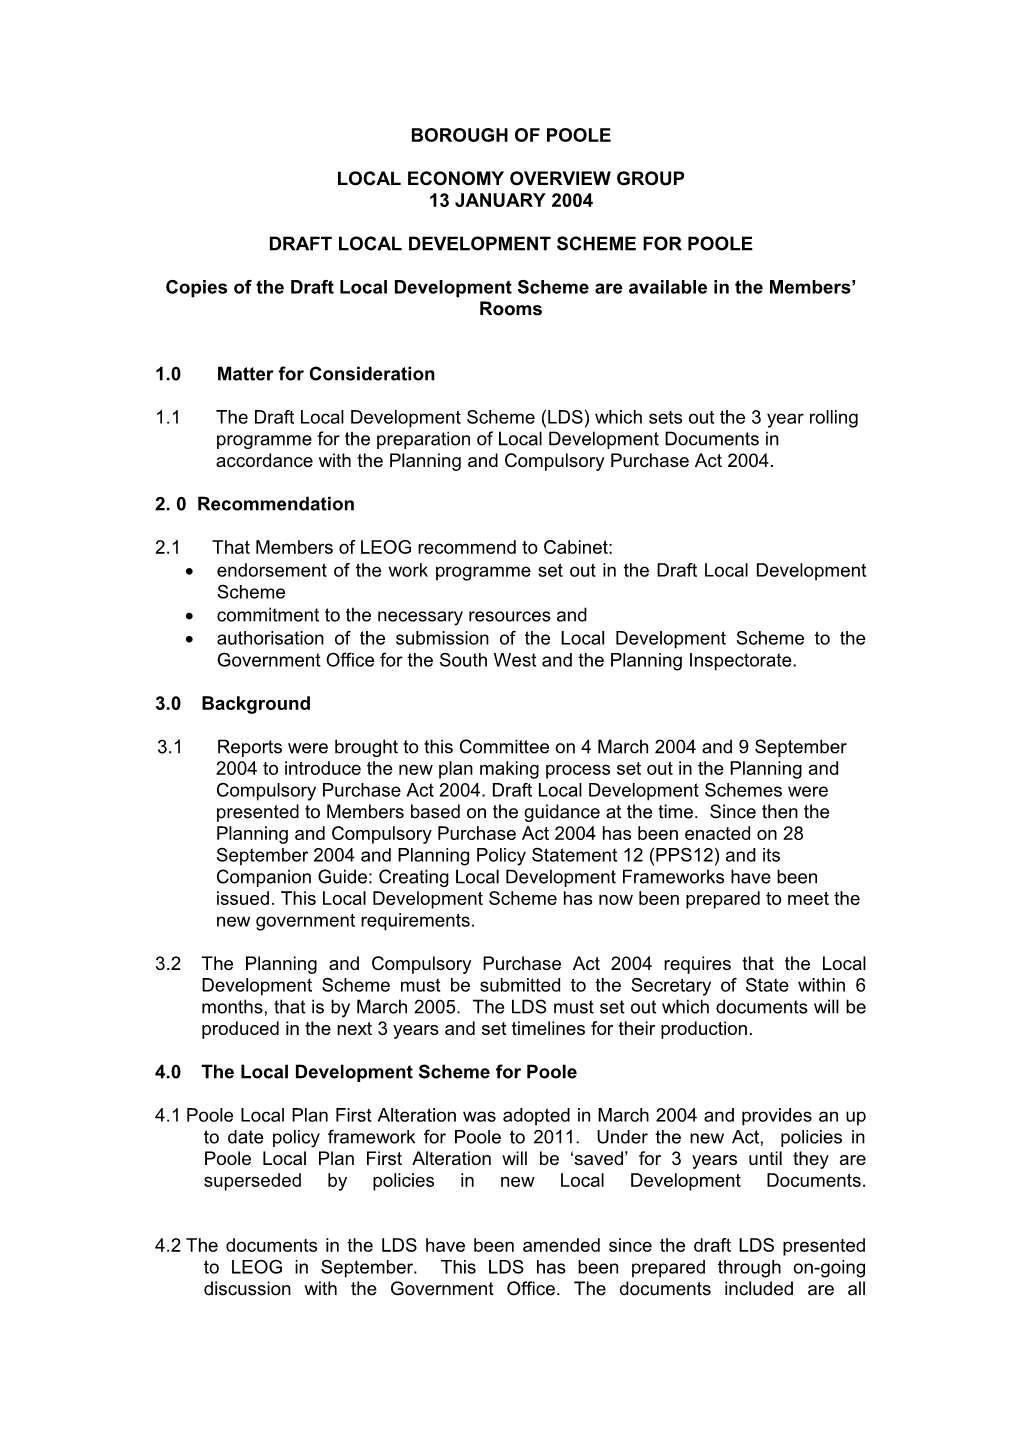 Draft Local Development Scheme for Poole